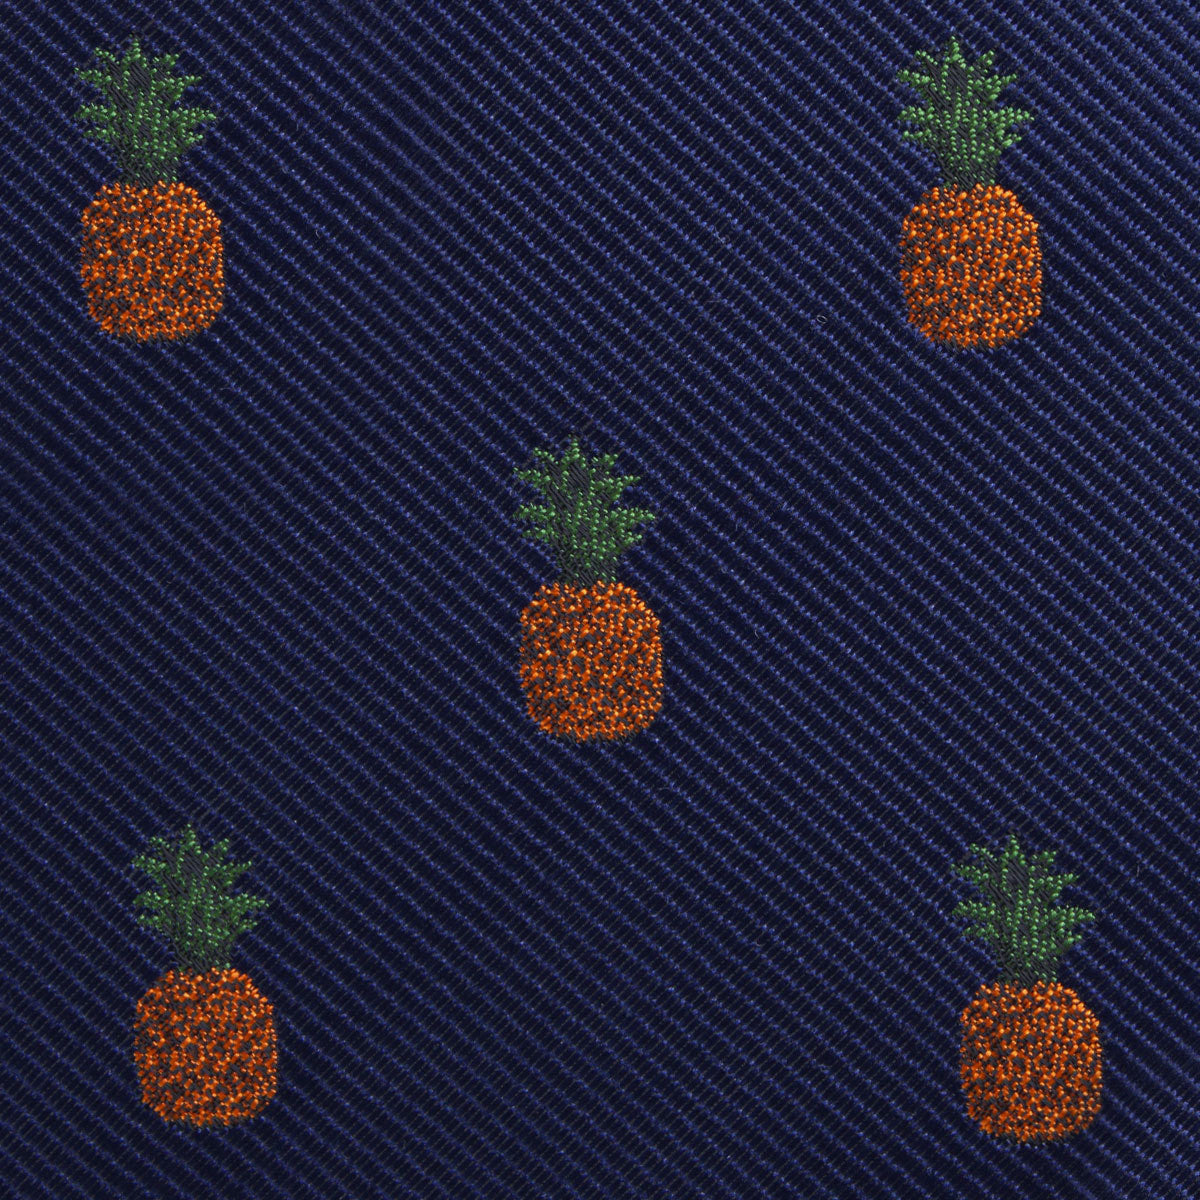 Pineapple Fabric Self Bowtie